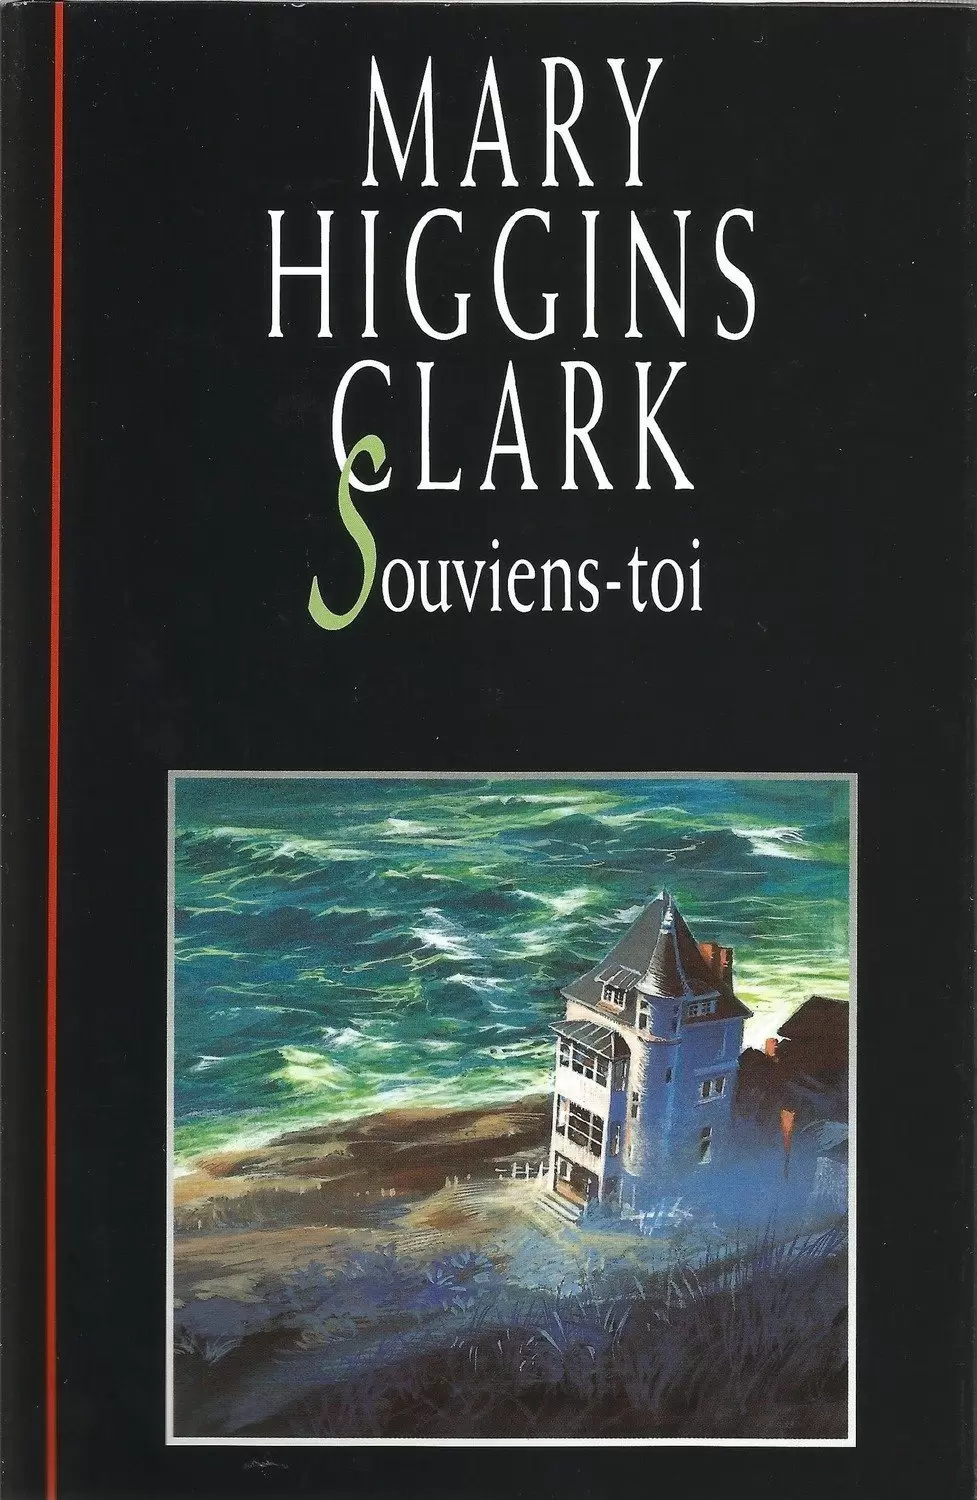 Mary Higgins Clark - Souviens-toi